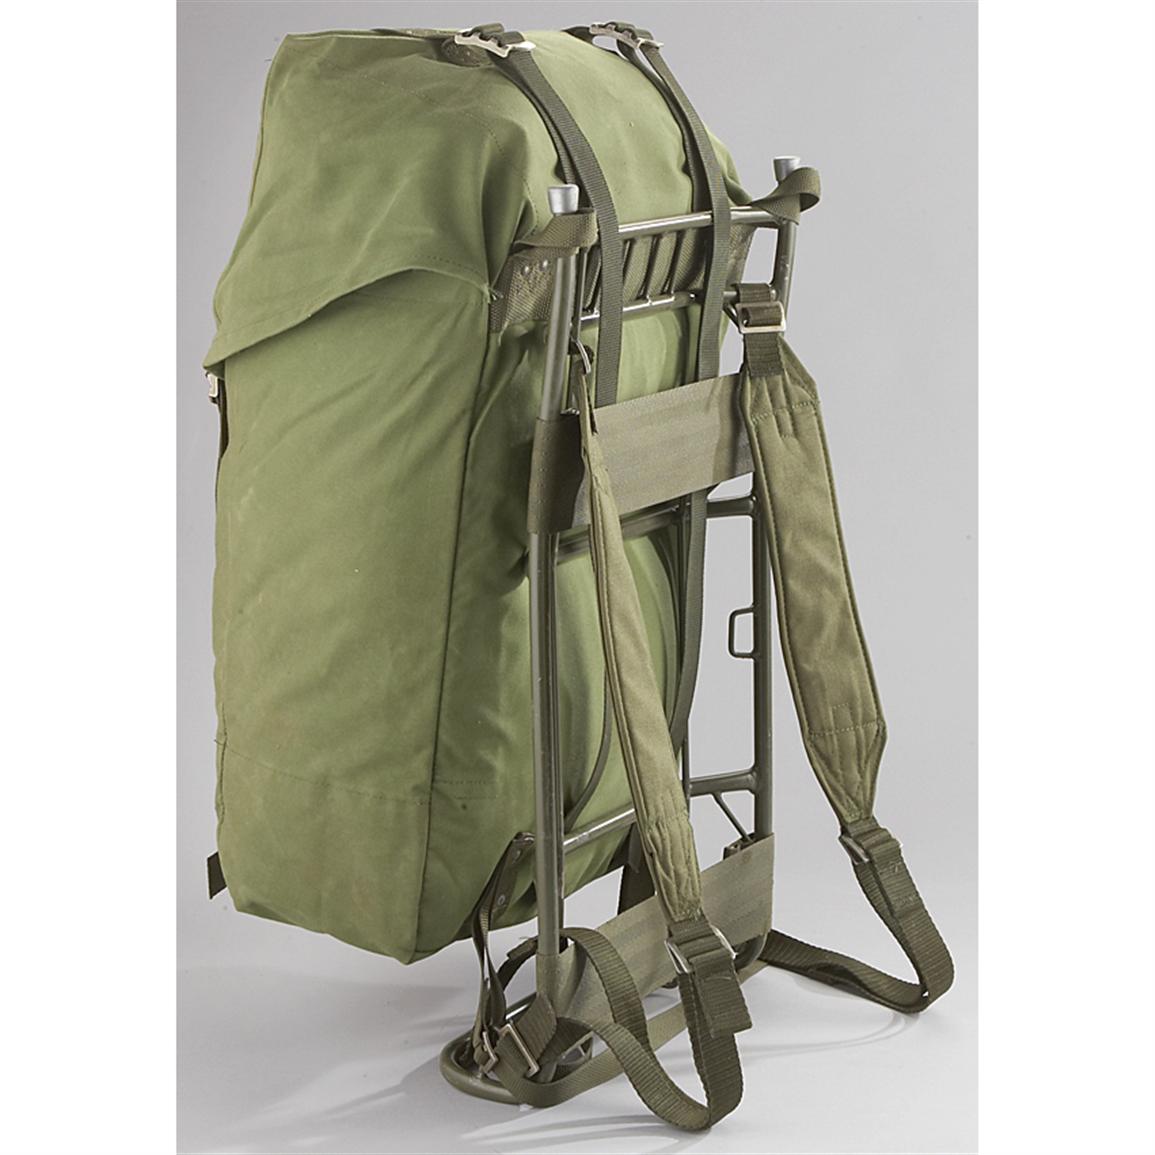 Used Swedish Military Backpack, Olive Drab - 186845, Rucksacks & Backpacks at Sportsman&#39;s Guide